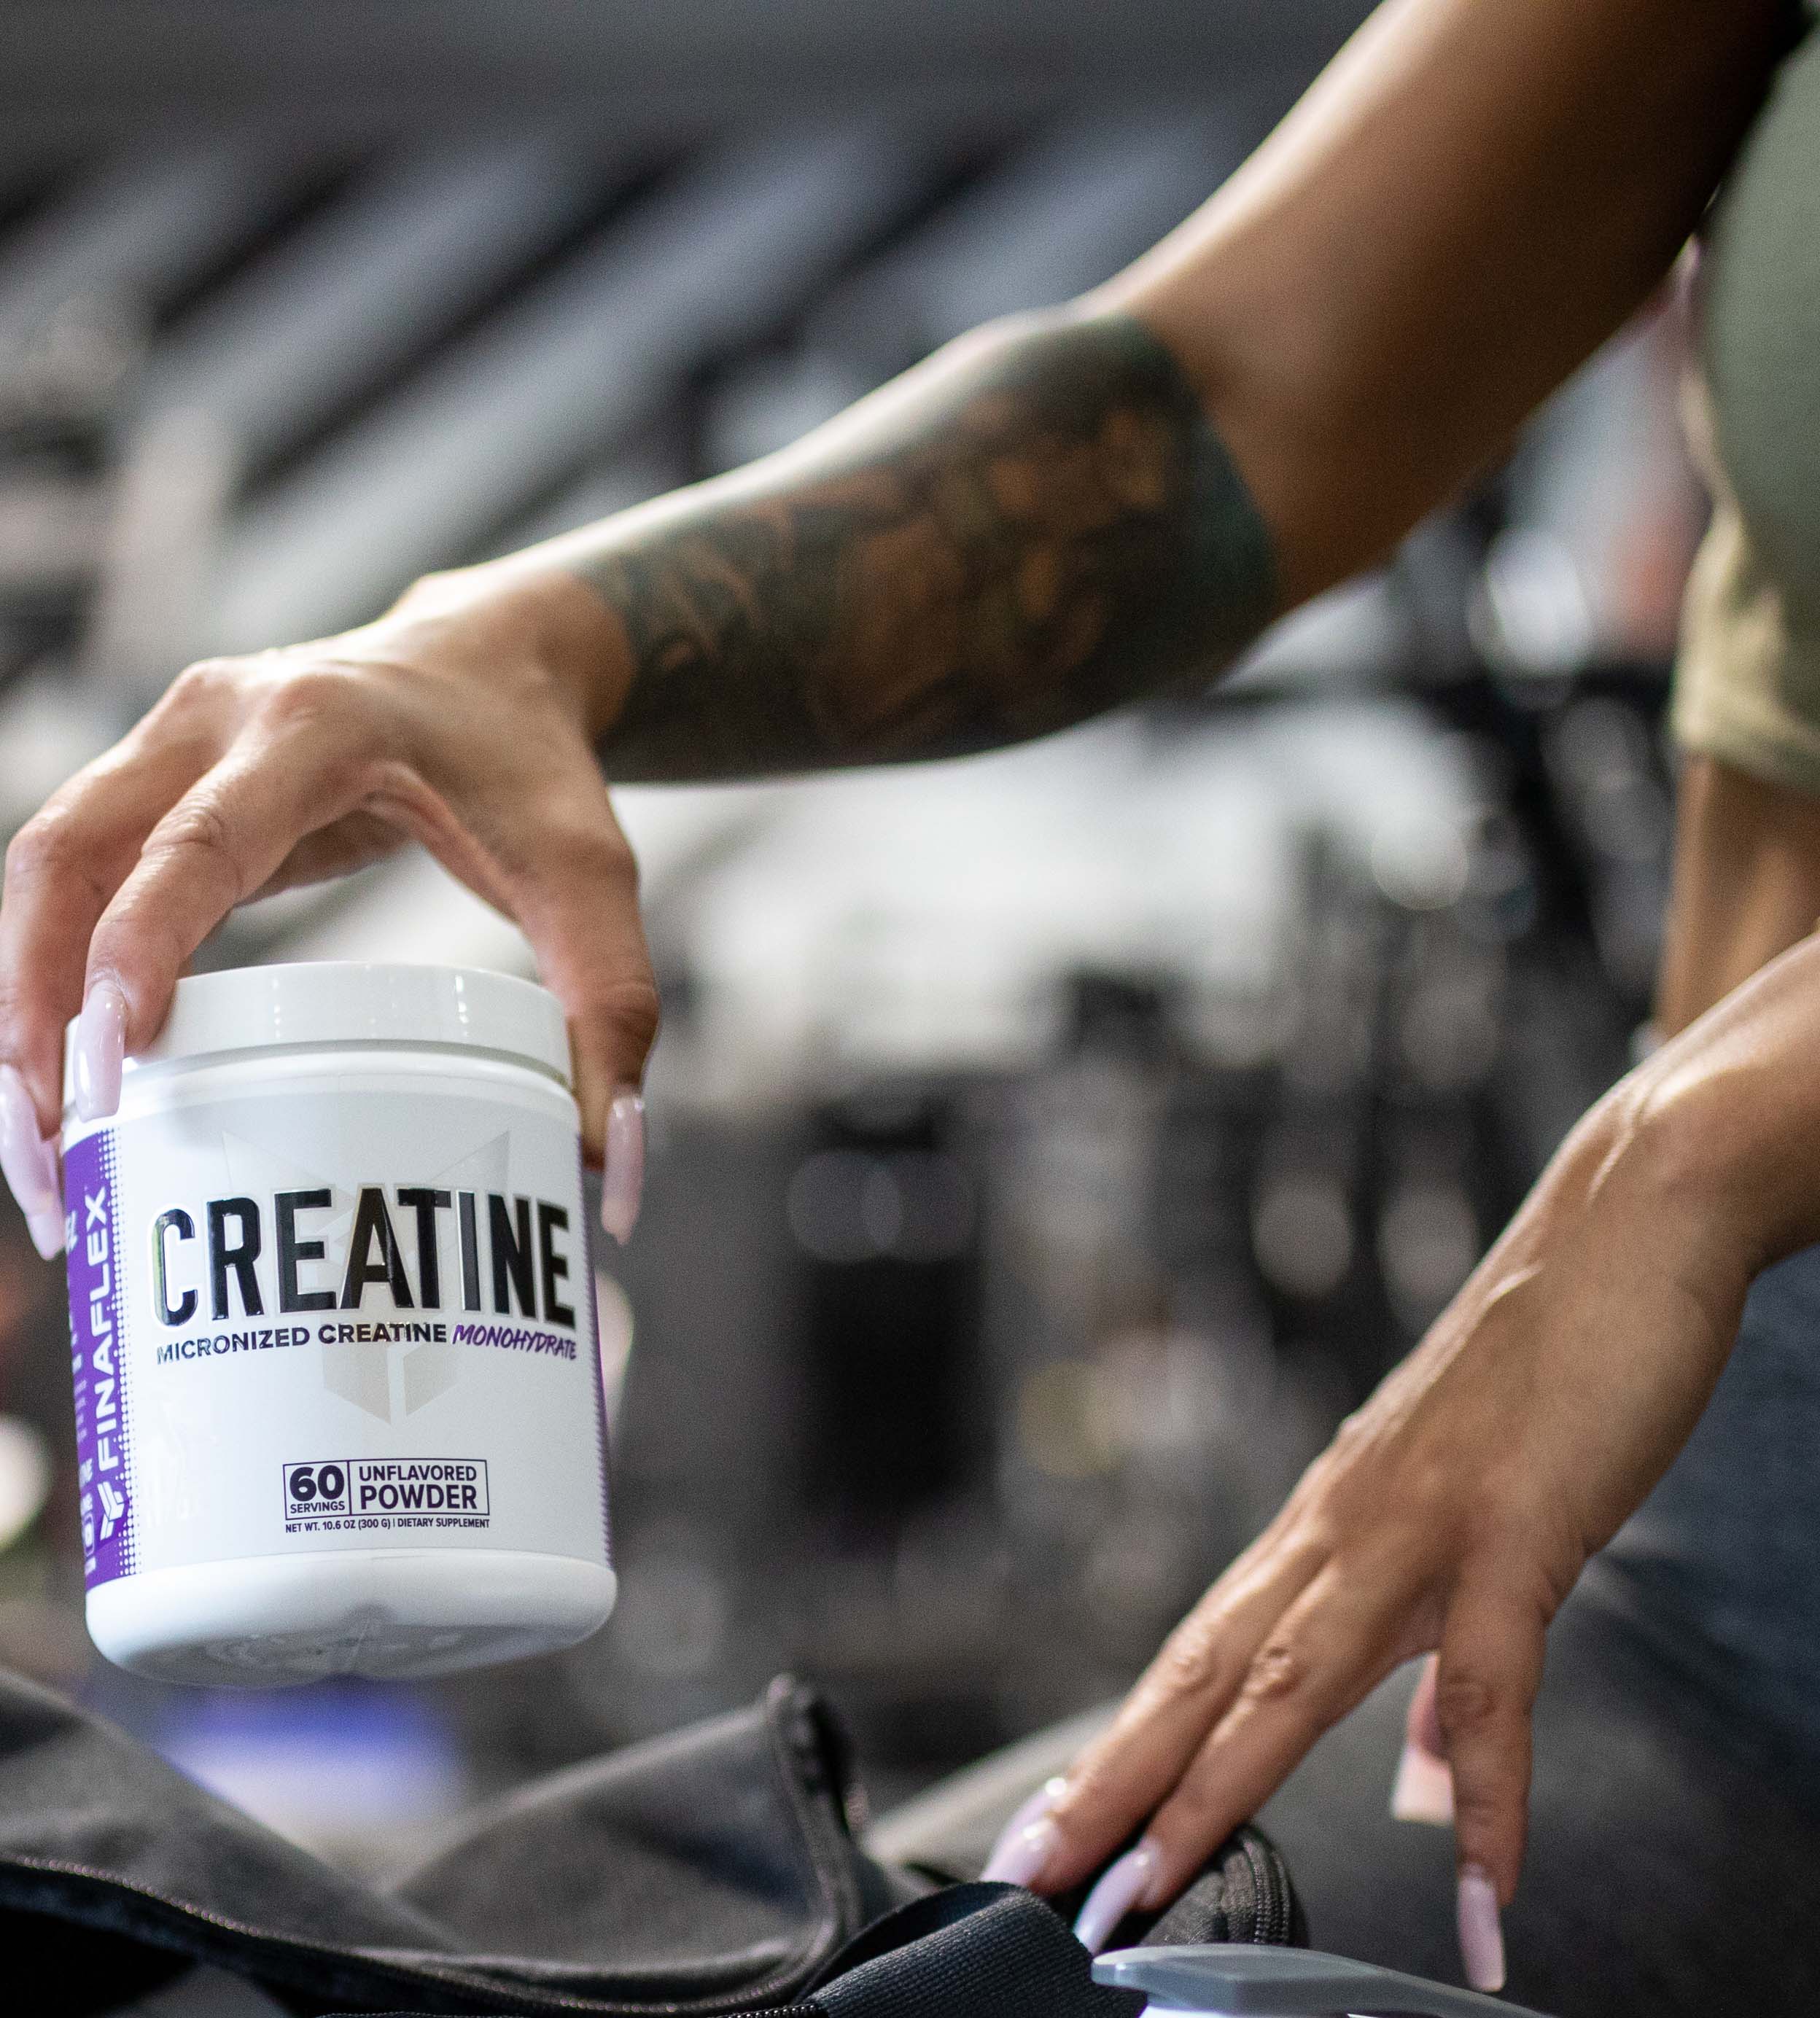 Pure Creatine | Finaflex | Muscular Strength 300 Grams - Unflavored